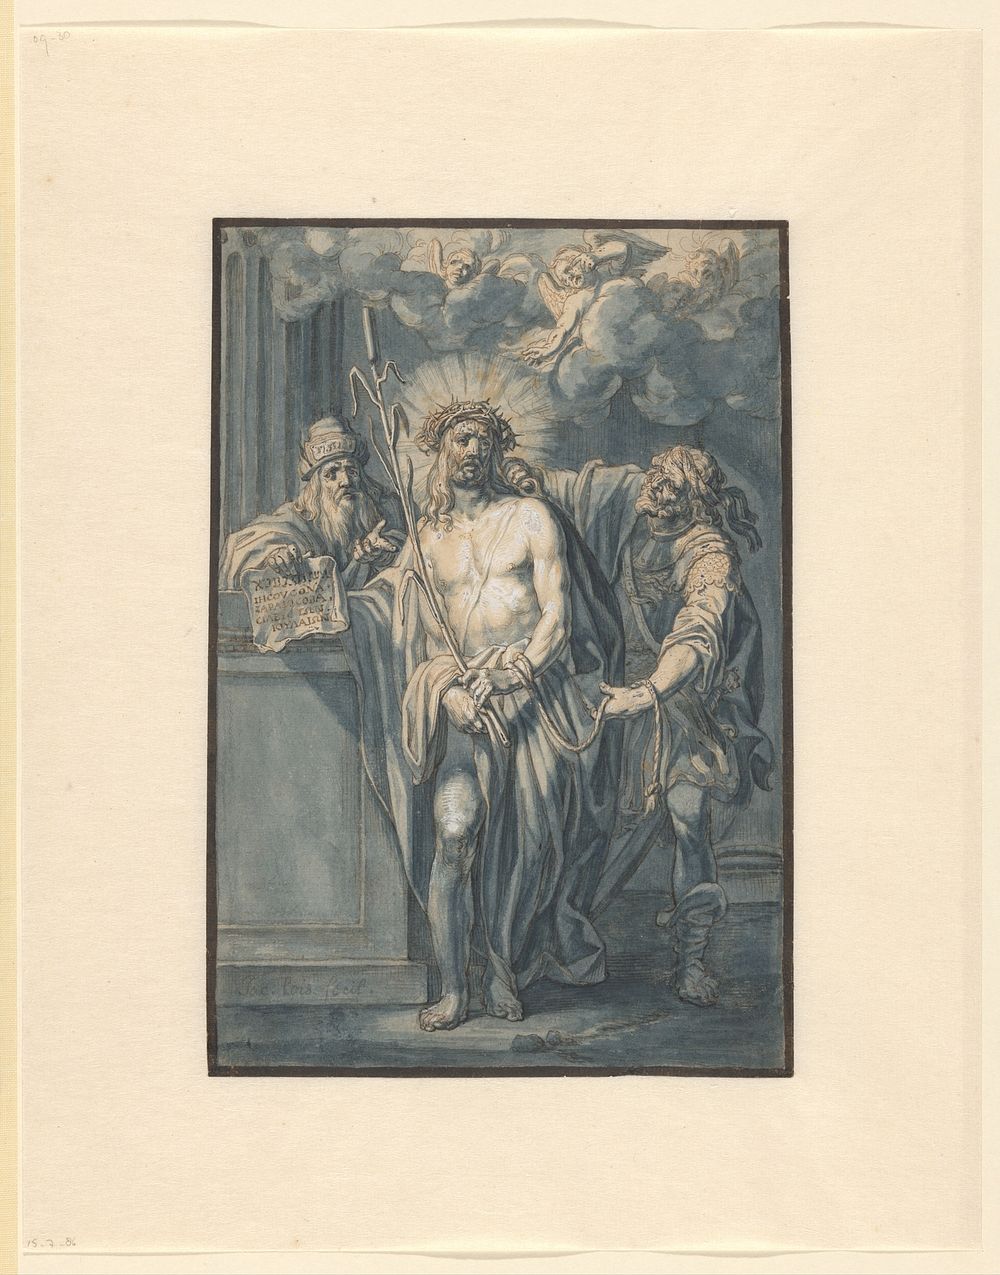 Ecce Homo (1638 - 1643) by Jacob Lois